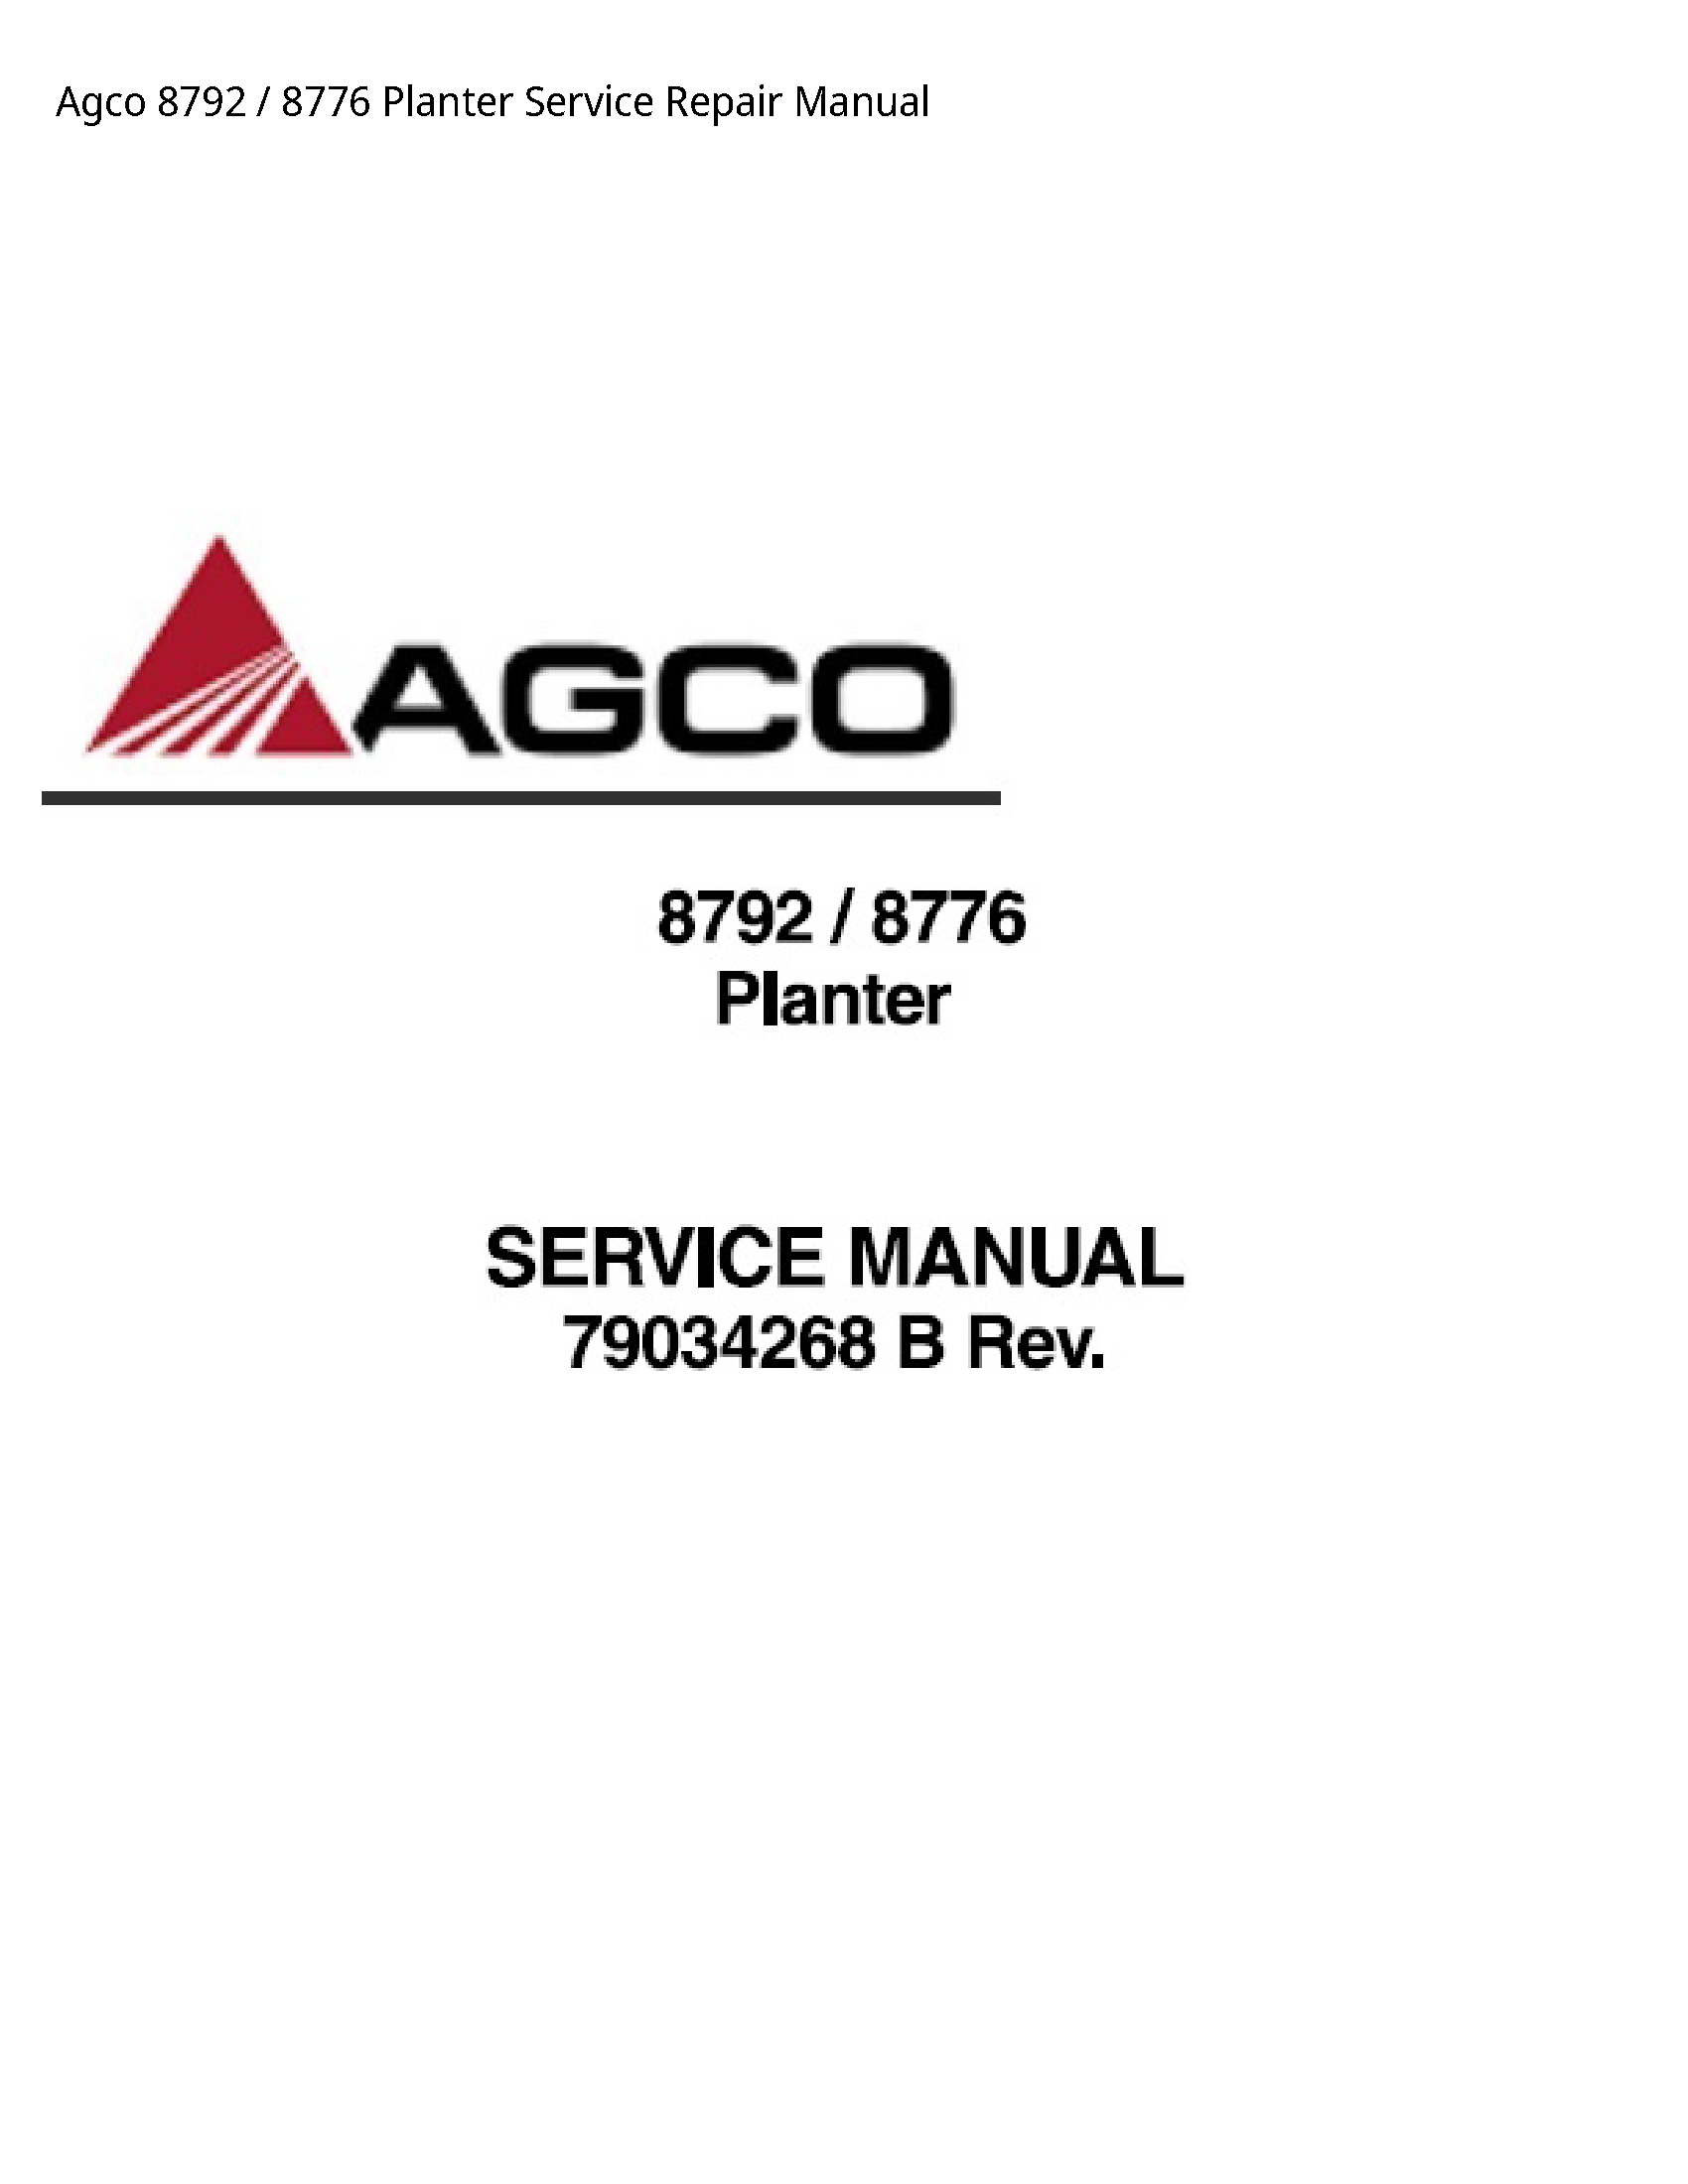 AGCO 8792 Planter manual